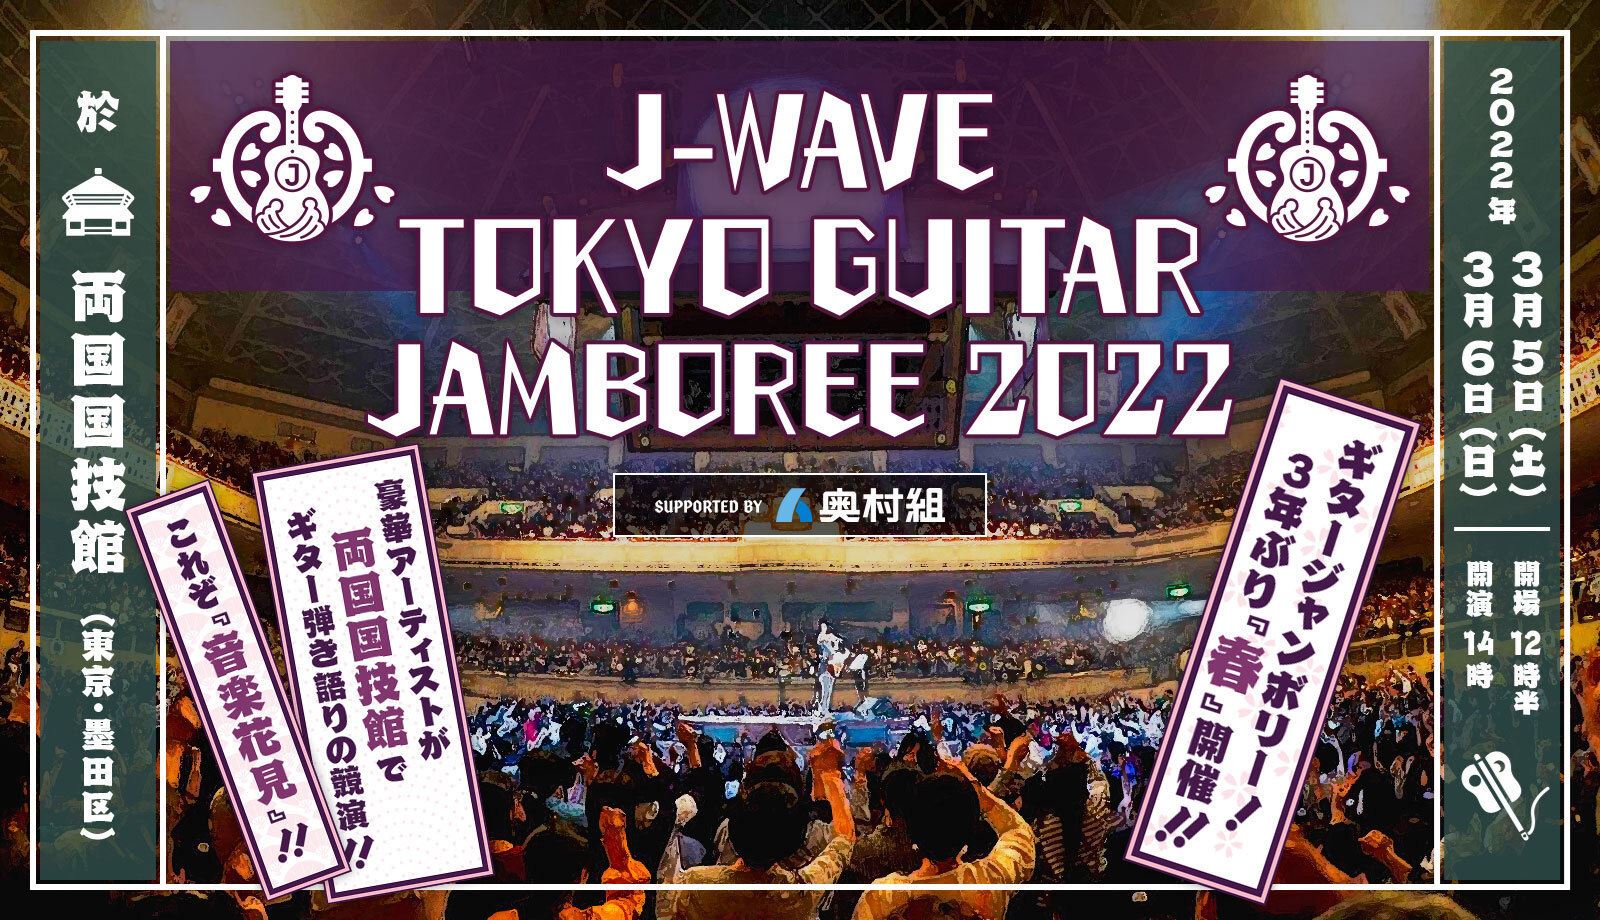 『J-WAVE TOKYO GUITAR JAMBOREE 2022 supported by 奥村組』告知画像